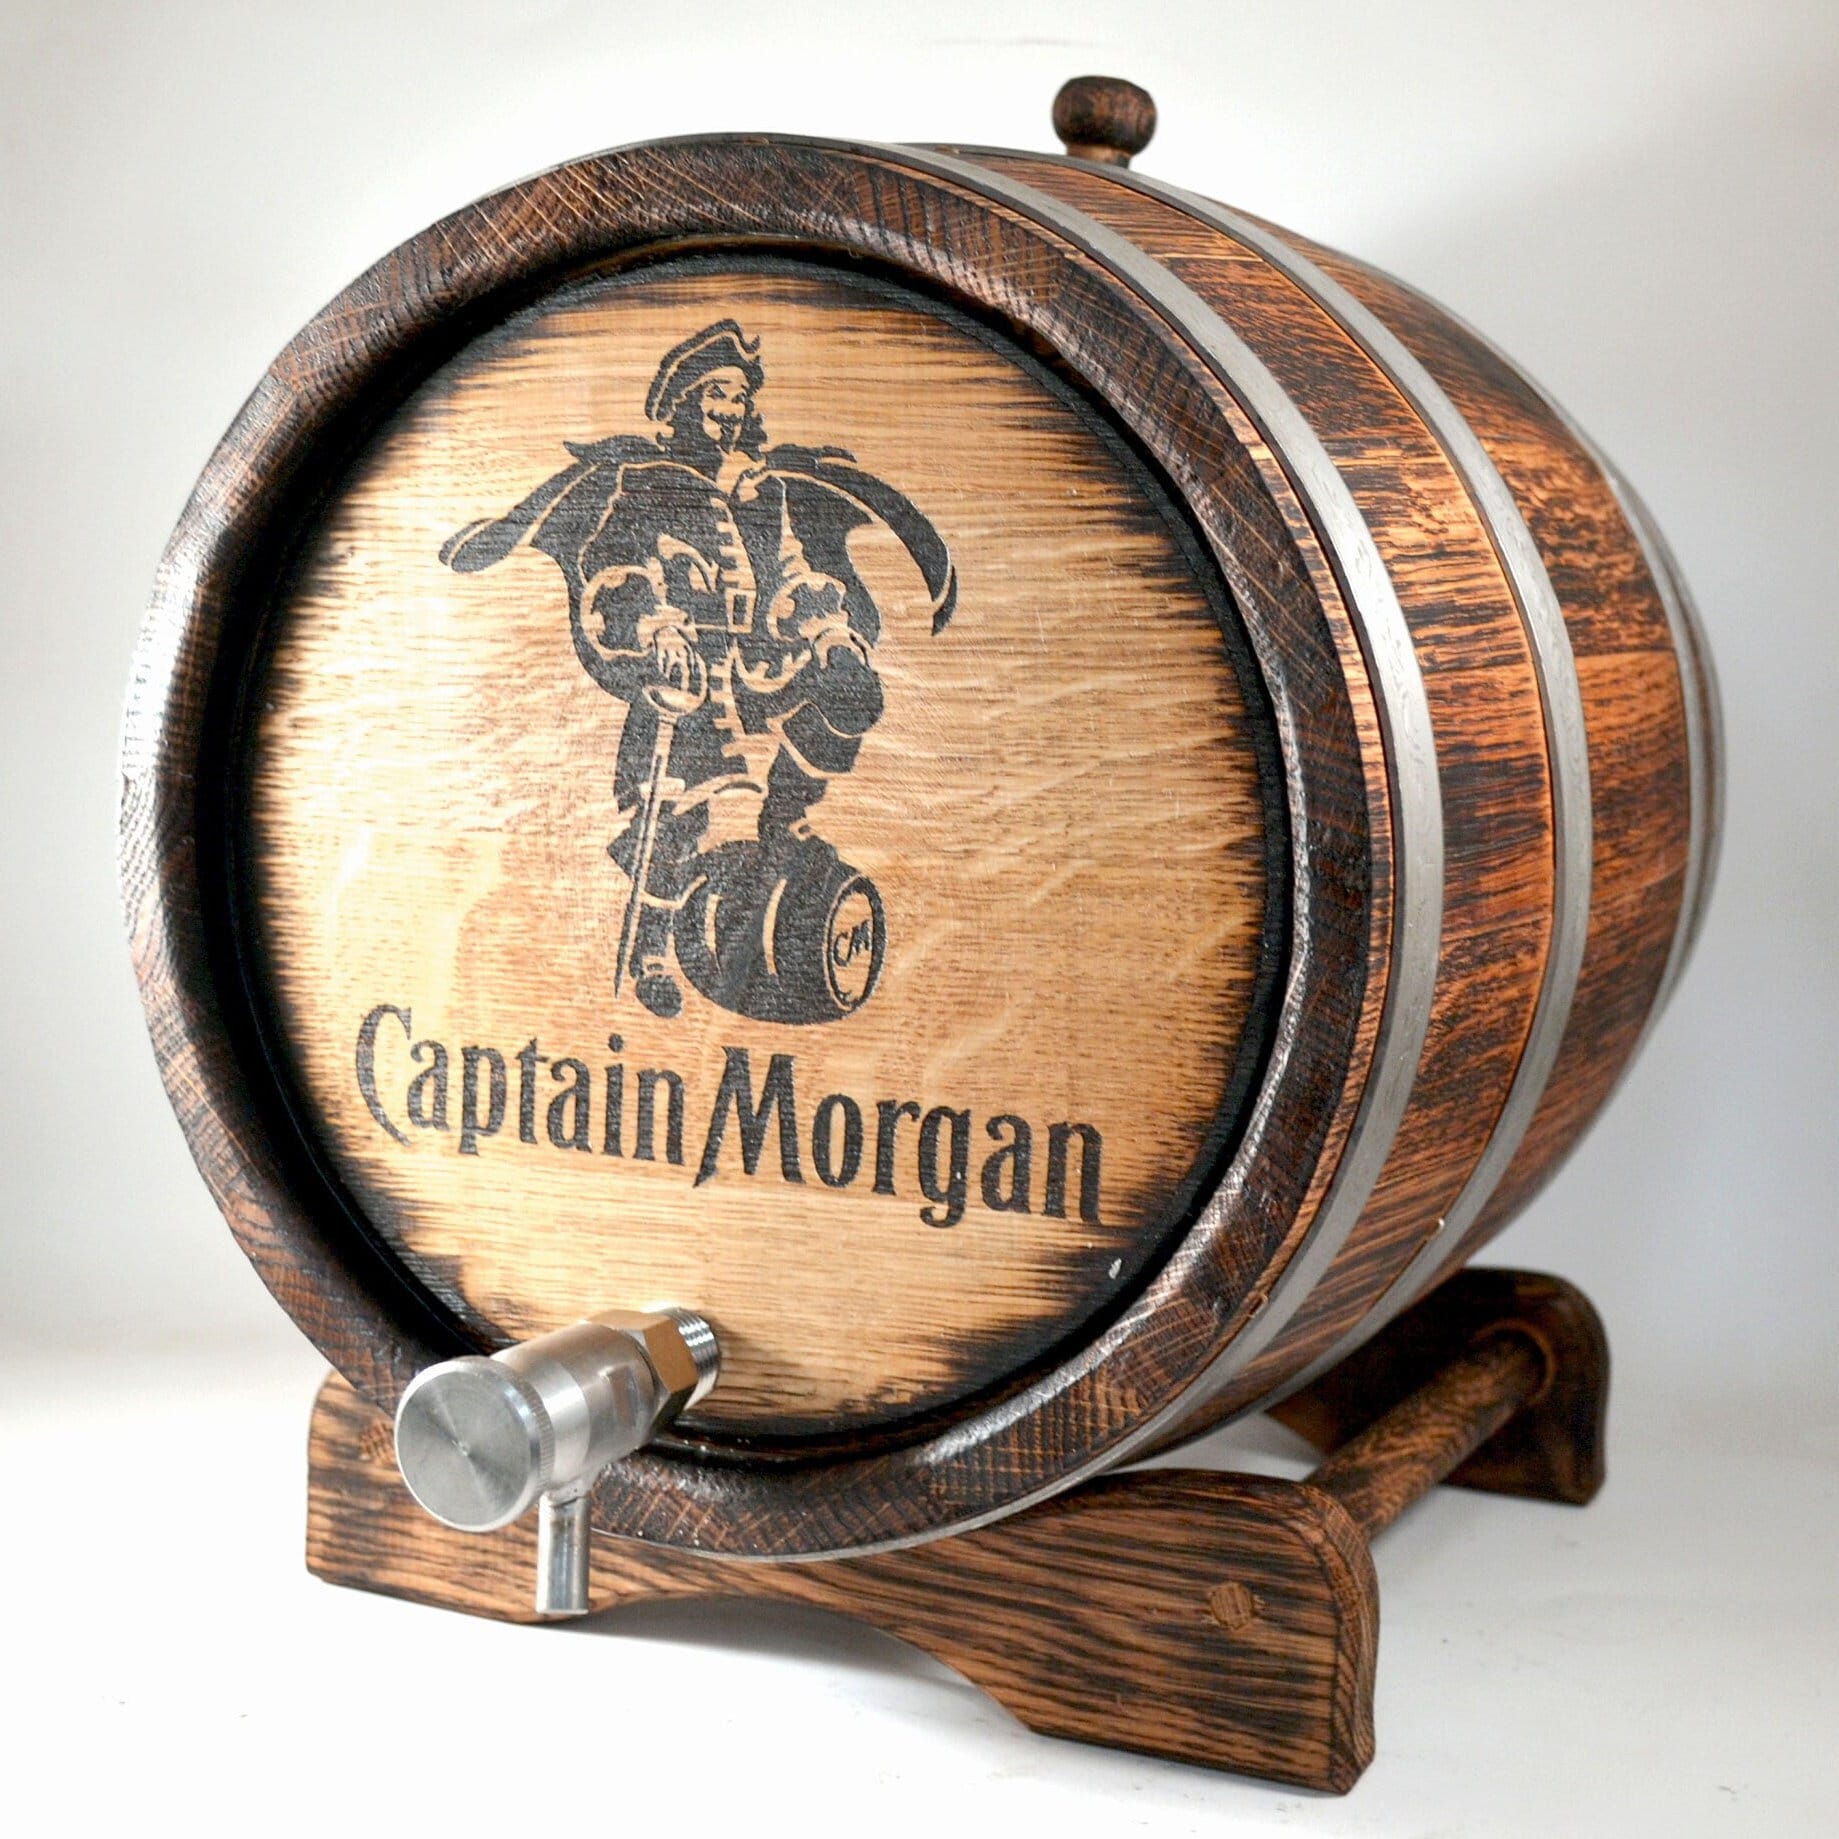 Rhum jamaïcain Captain Morgan (1 litre) - Grossiste